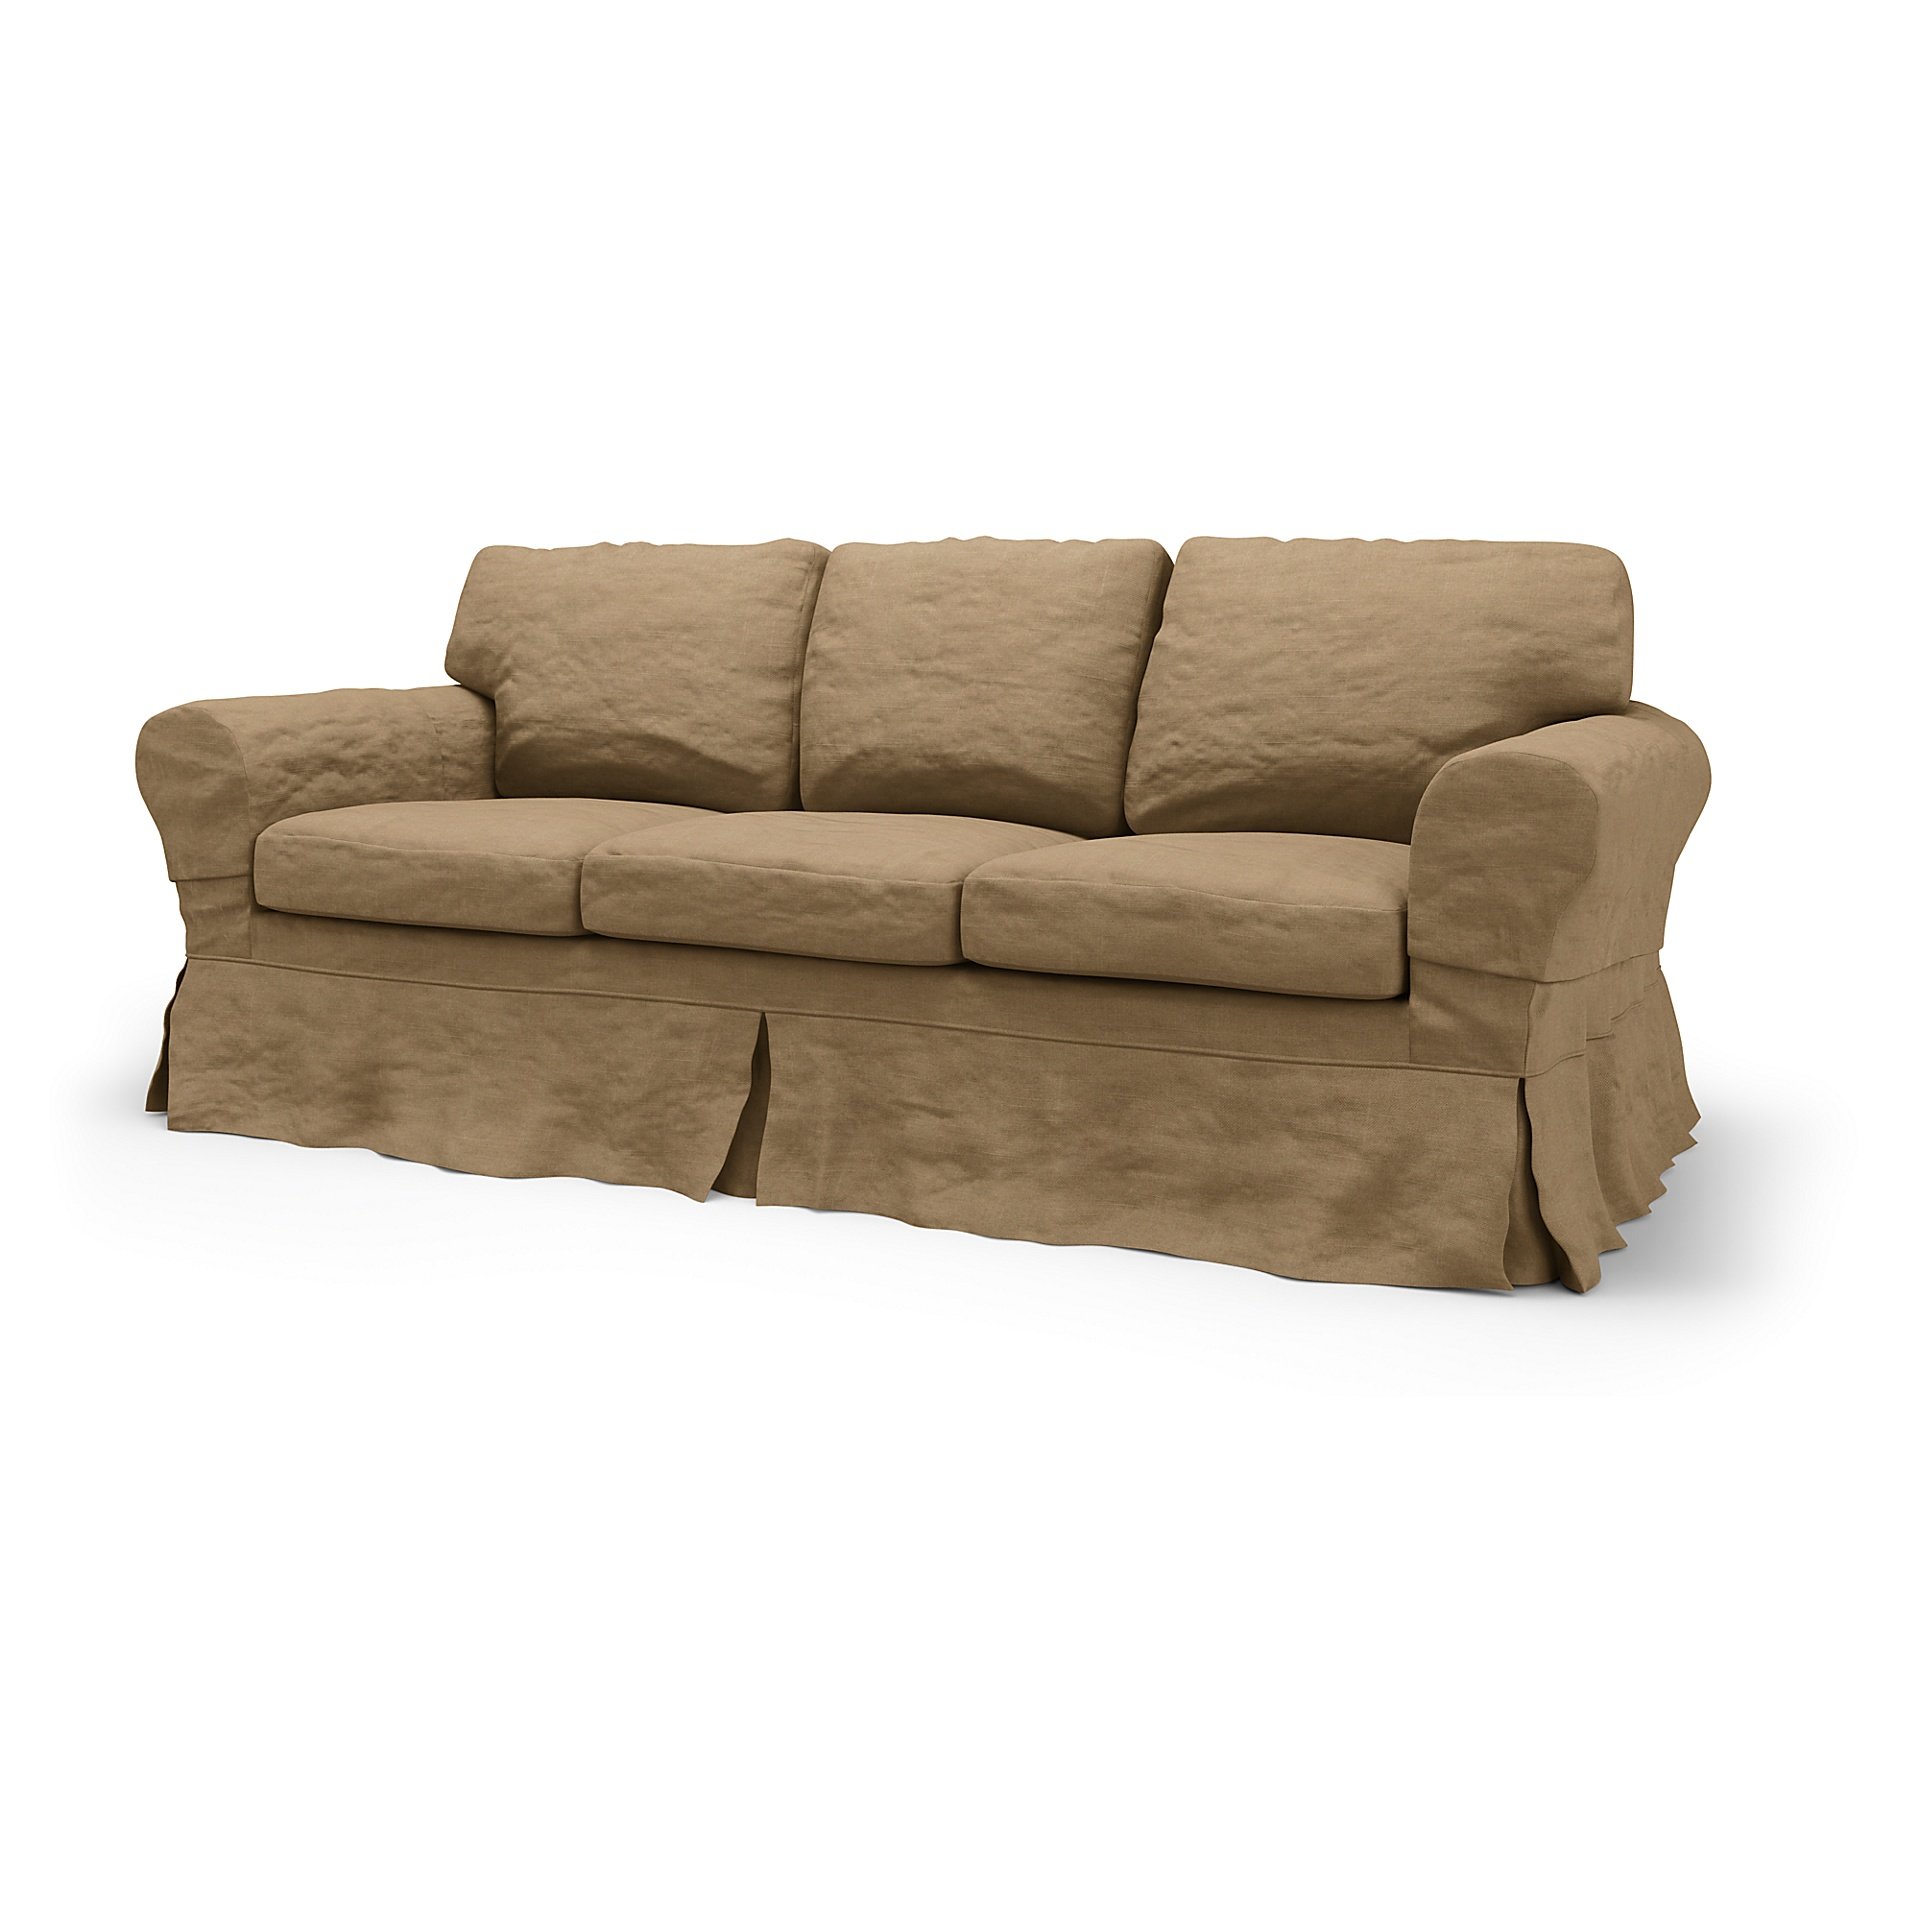 IKEA - Ektorp 3 Seater Sofa Bed Cover, Sand, Wool - Bemz